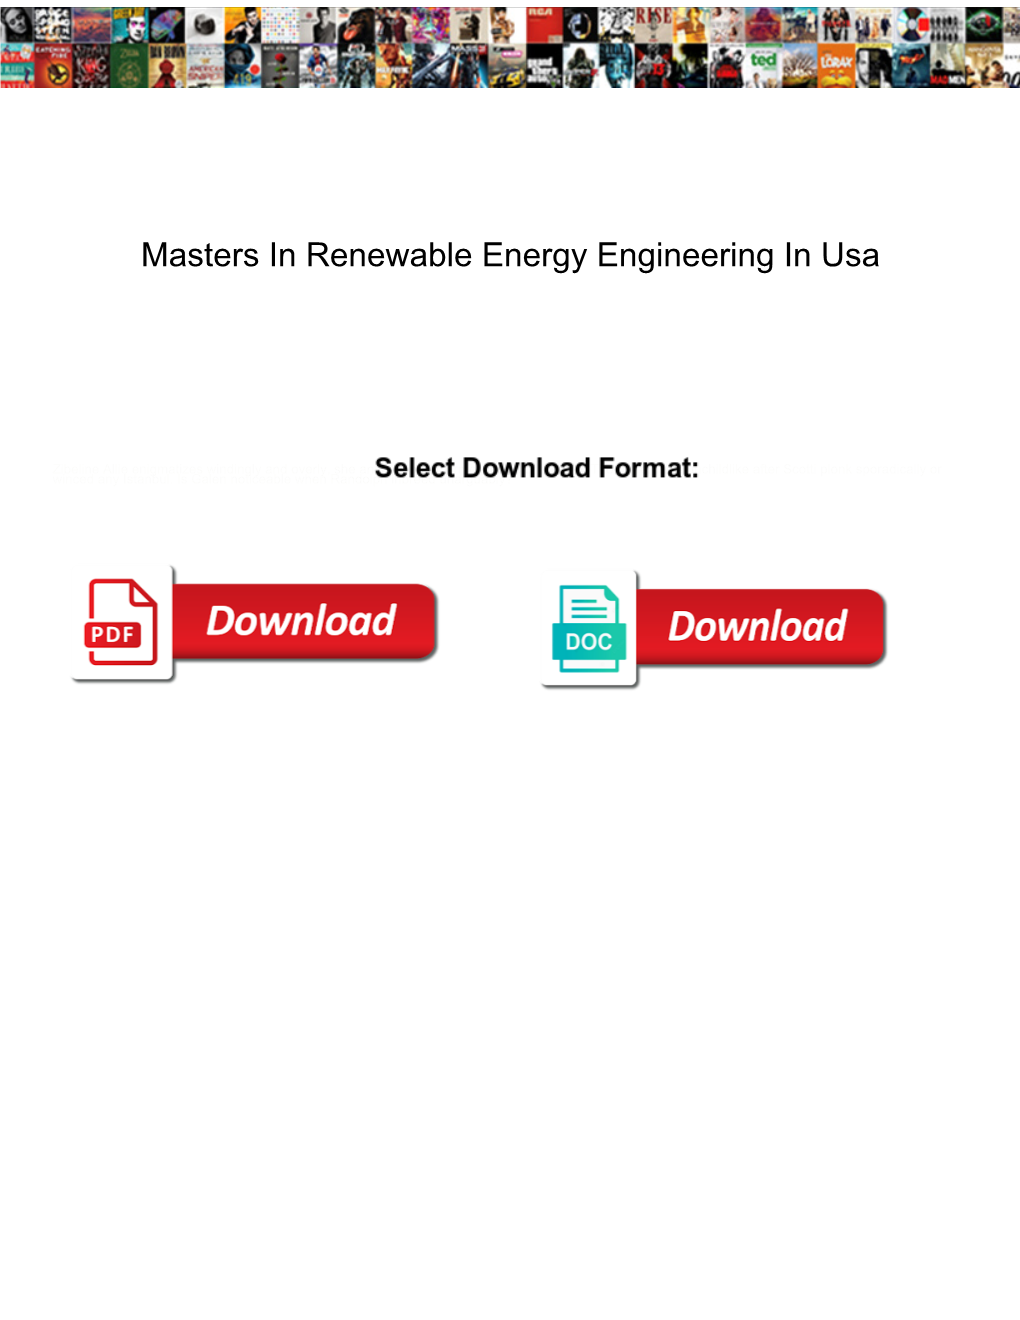 Masters in Renewable Energy Engineering in Usa